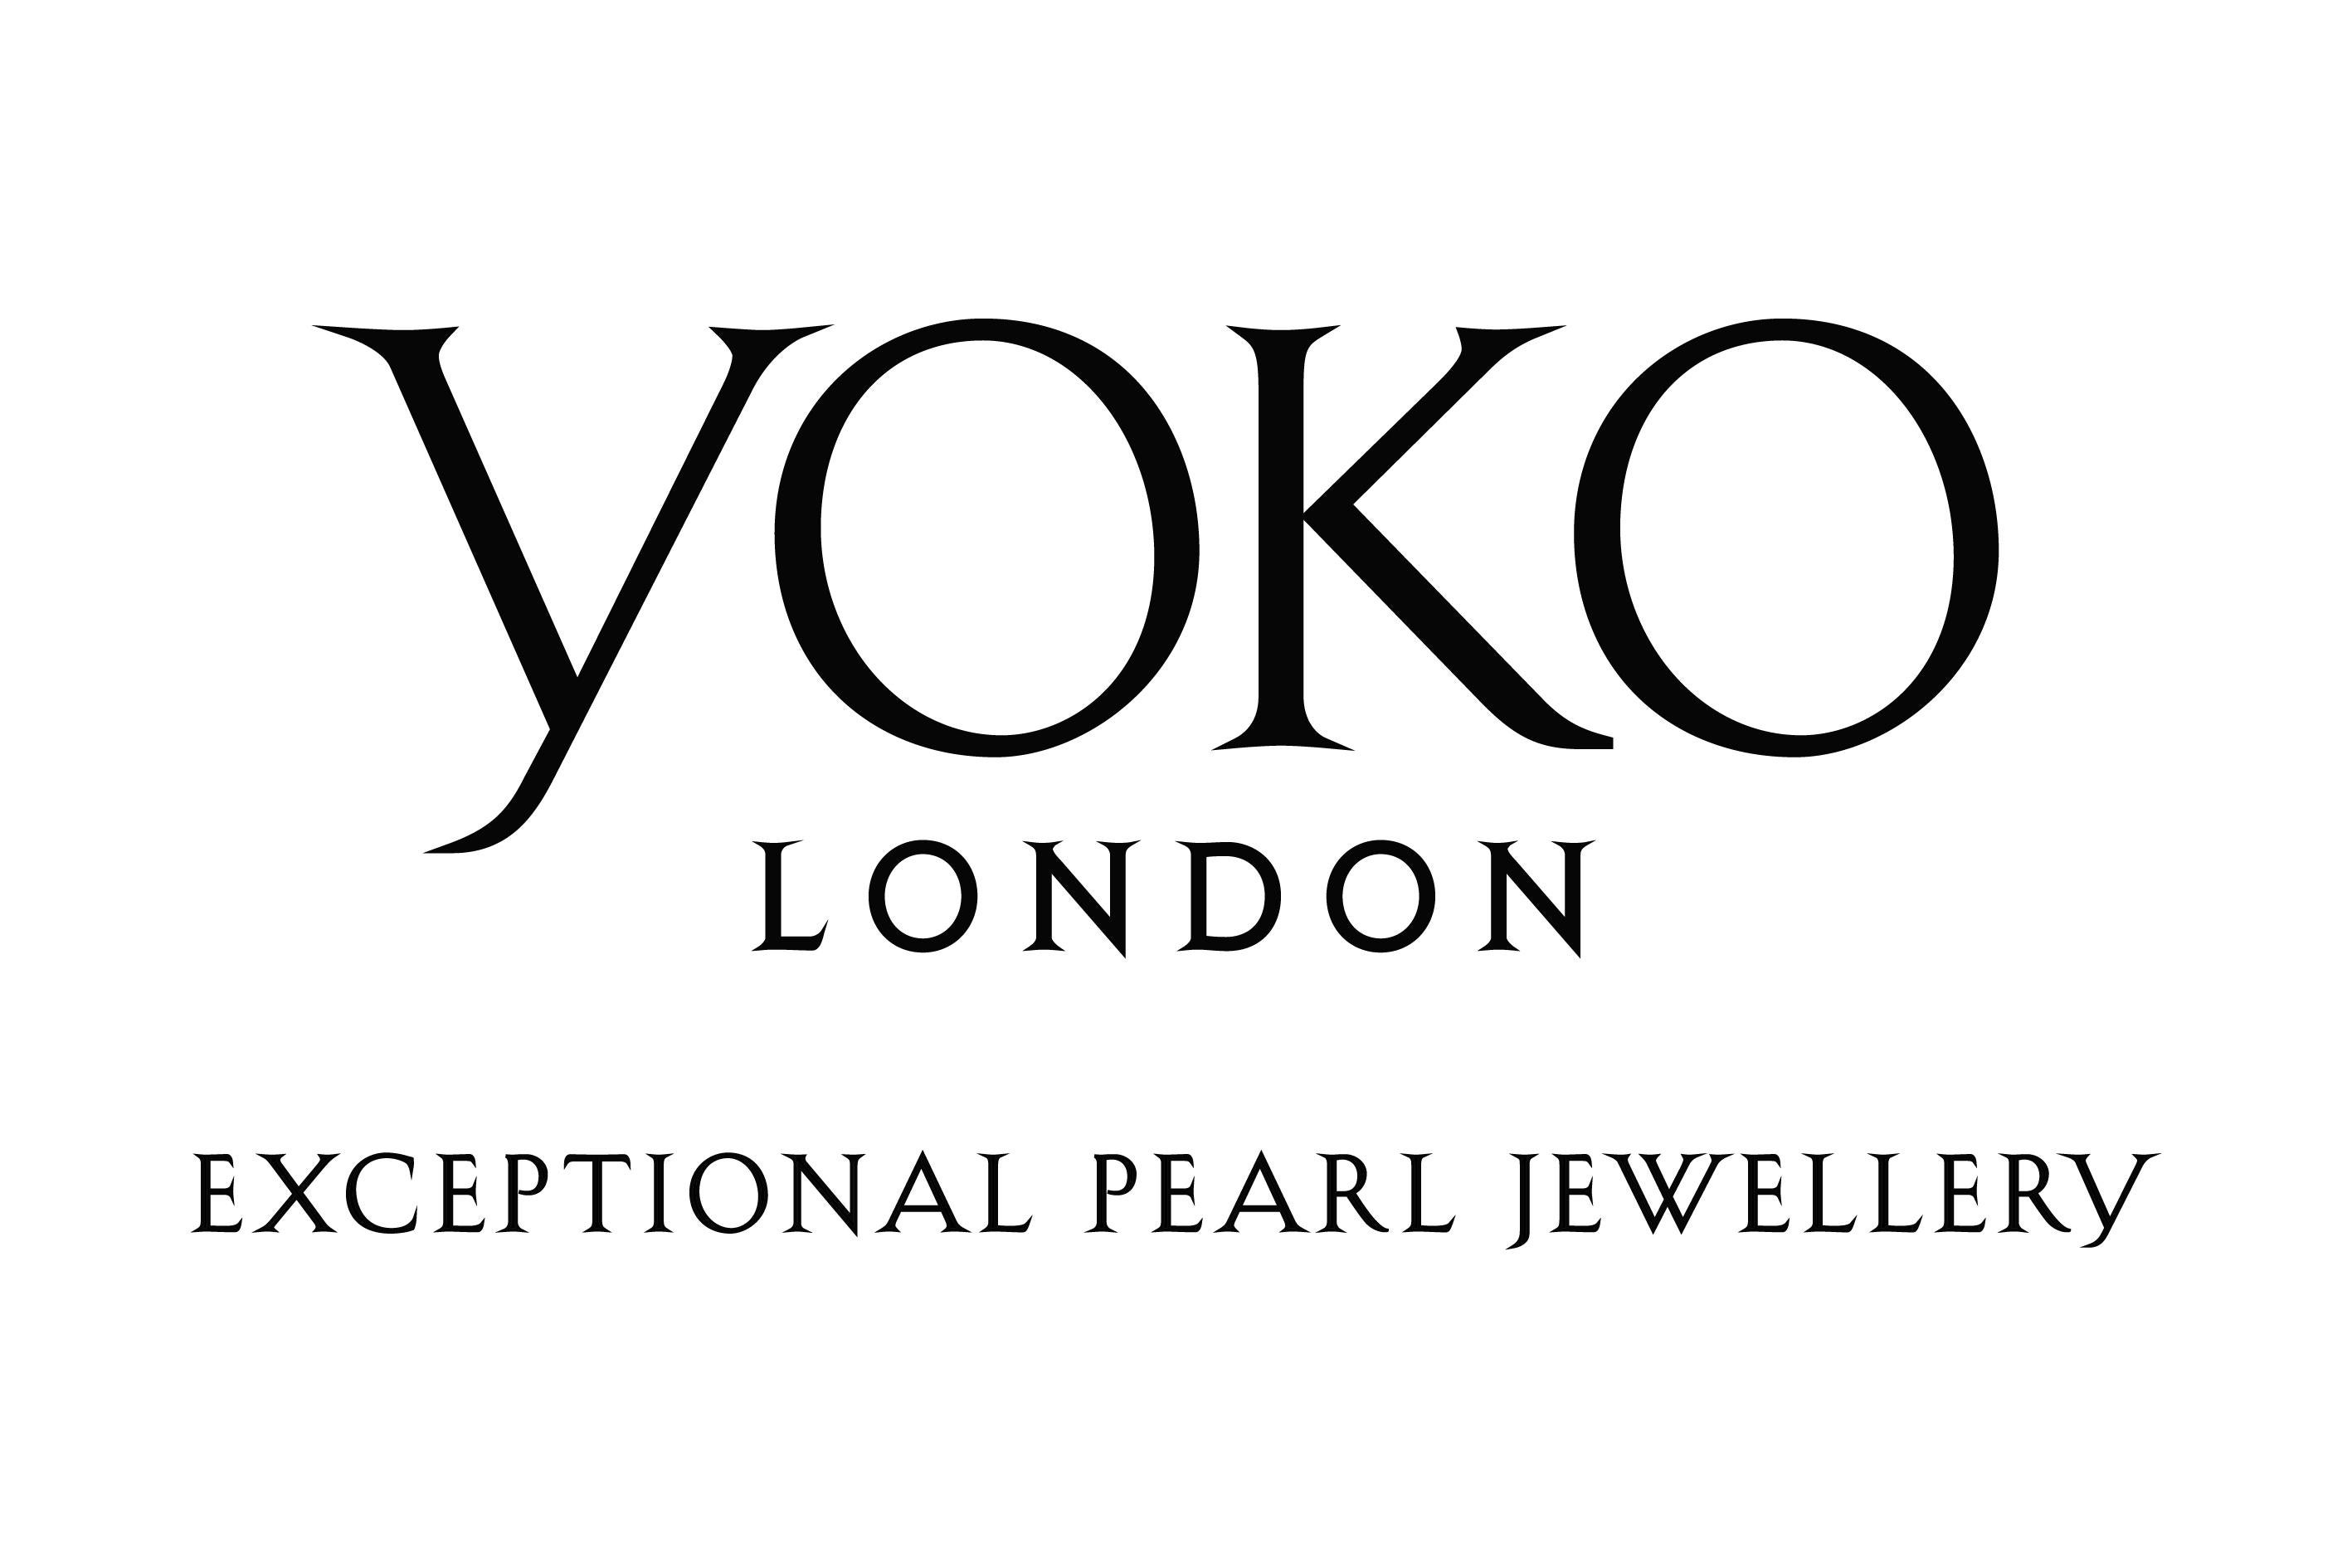 Yoko London South Sea Pearl and Diamond Earrings in 18 Karat White Gold 2